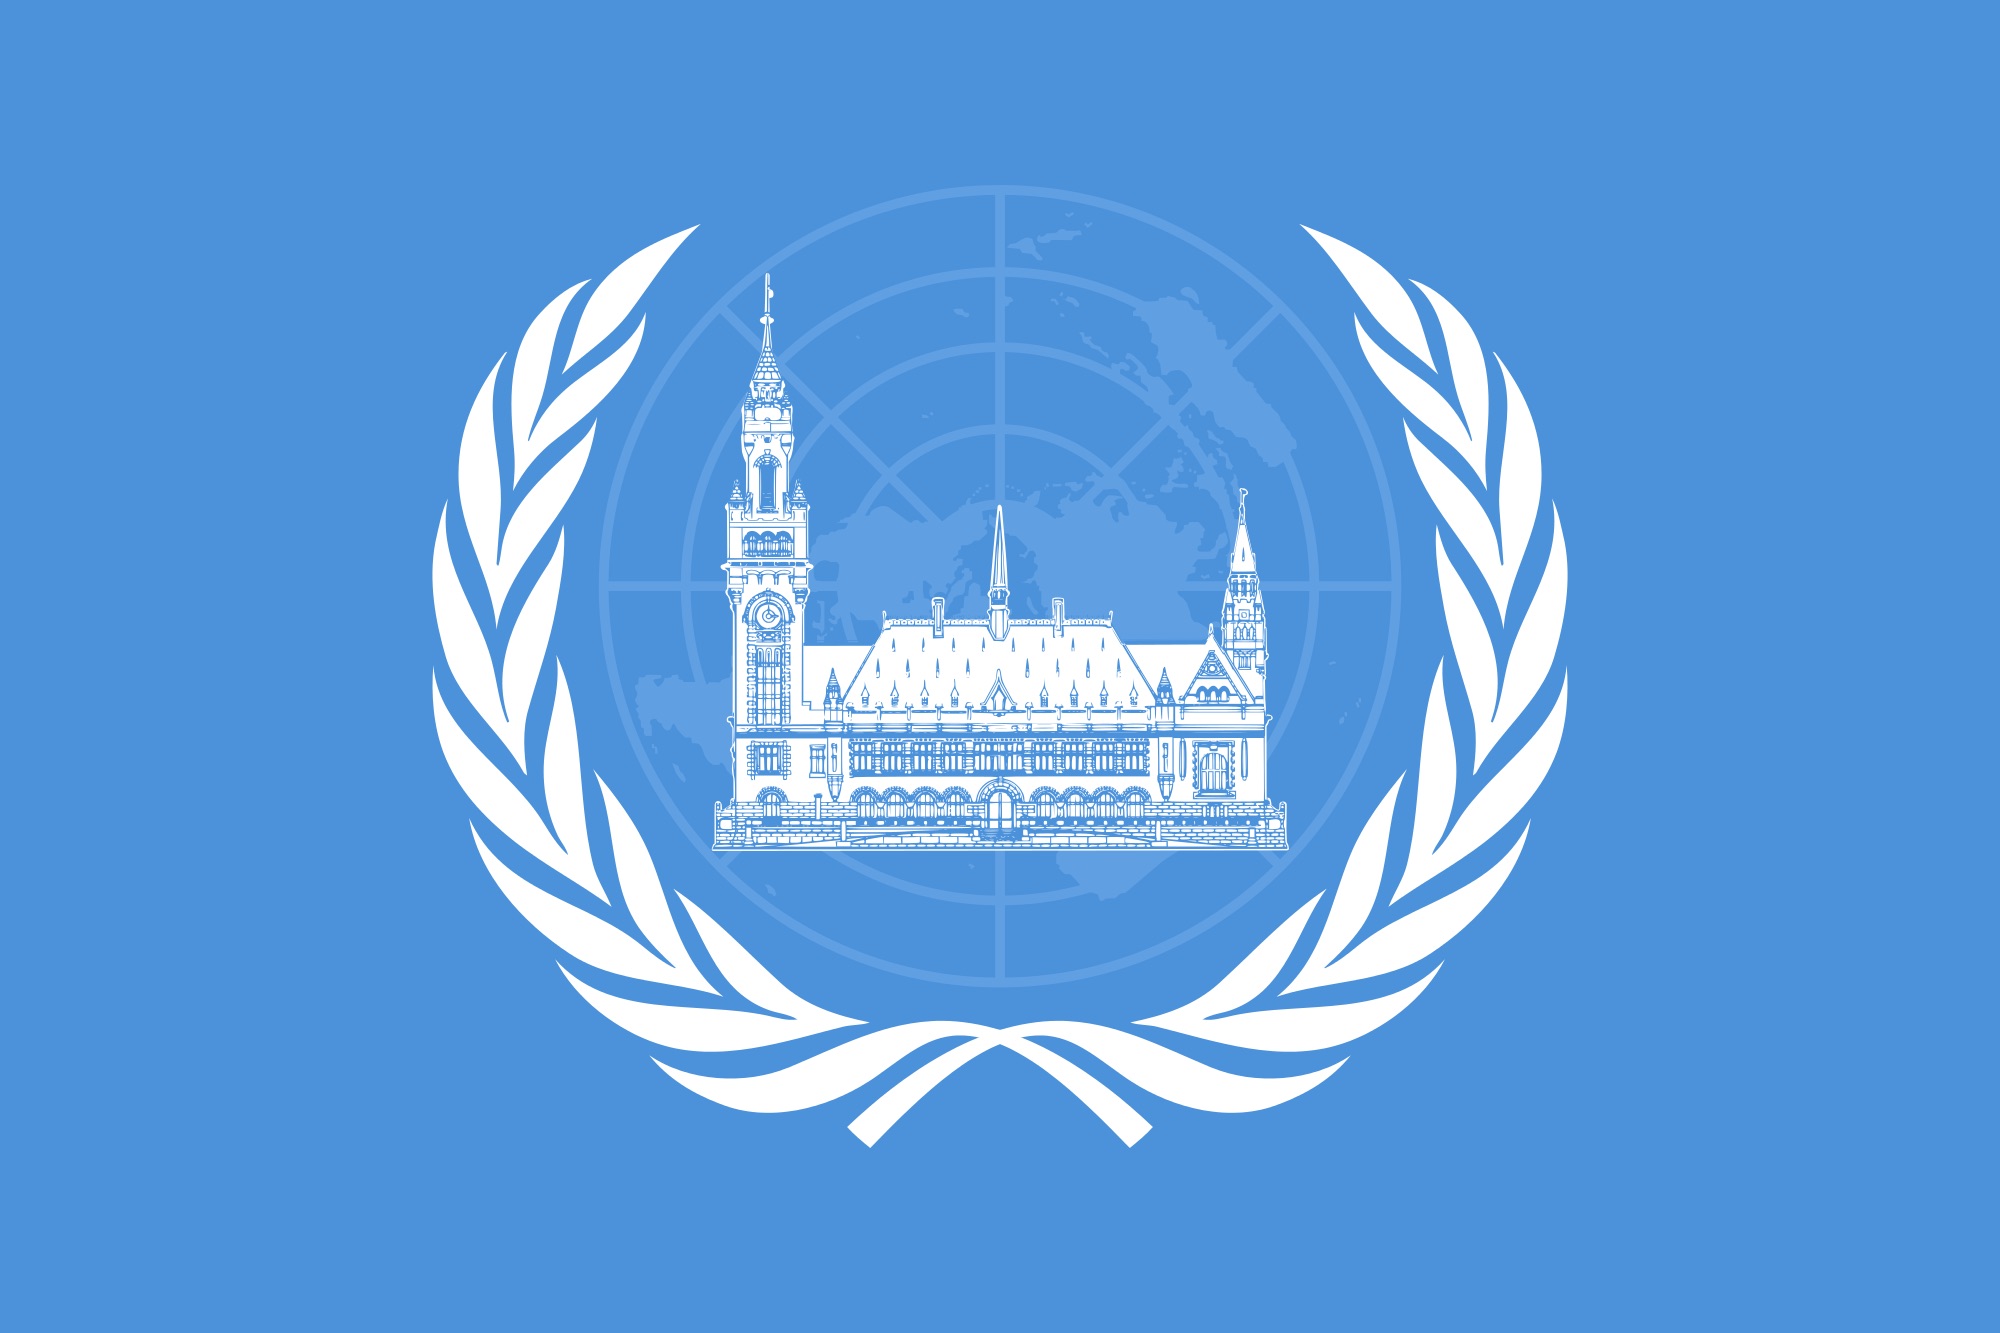 Peace Palace UN style flag Creative Commons